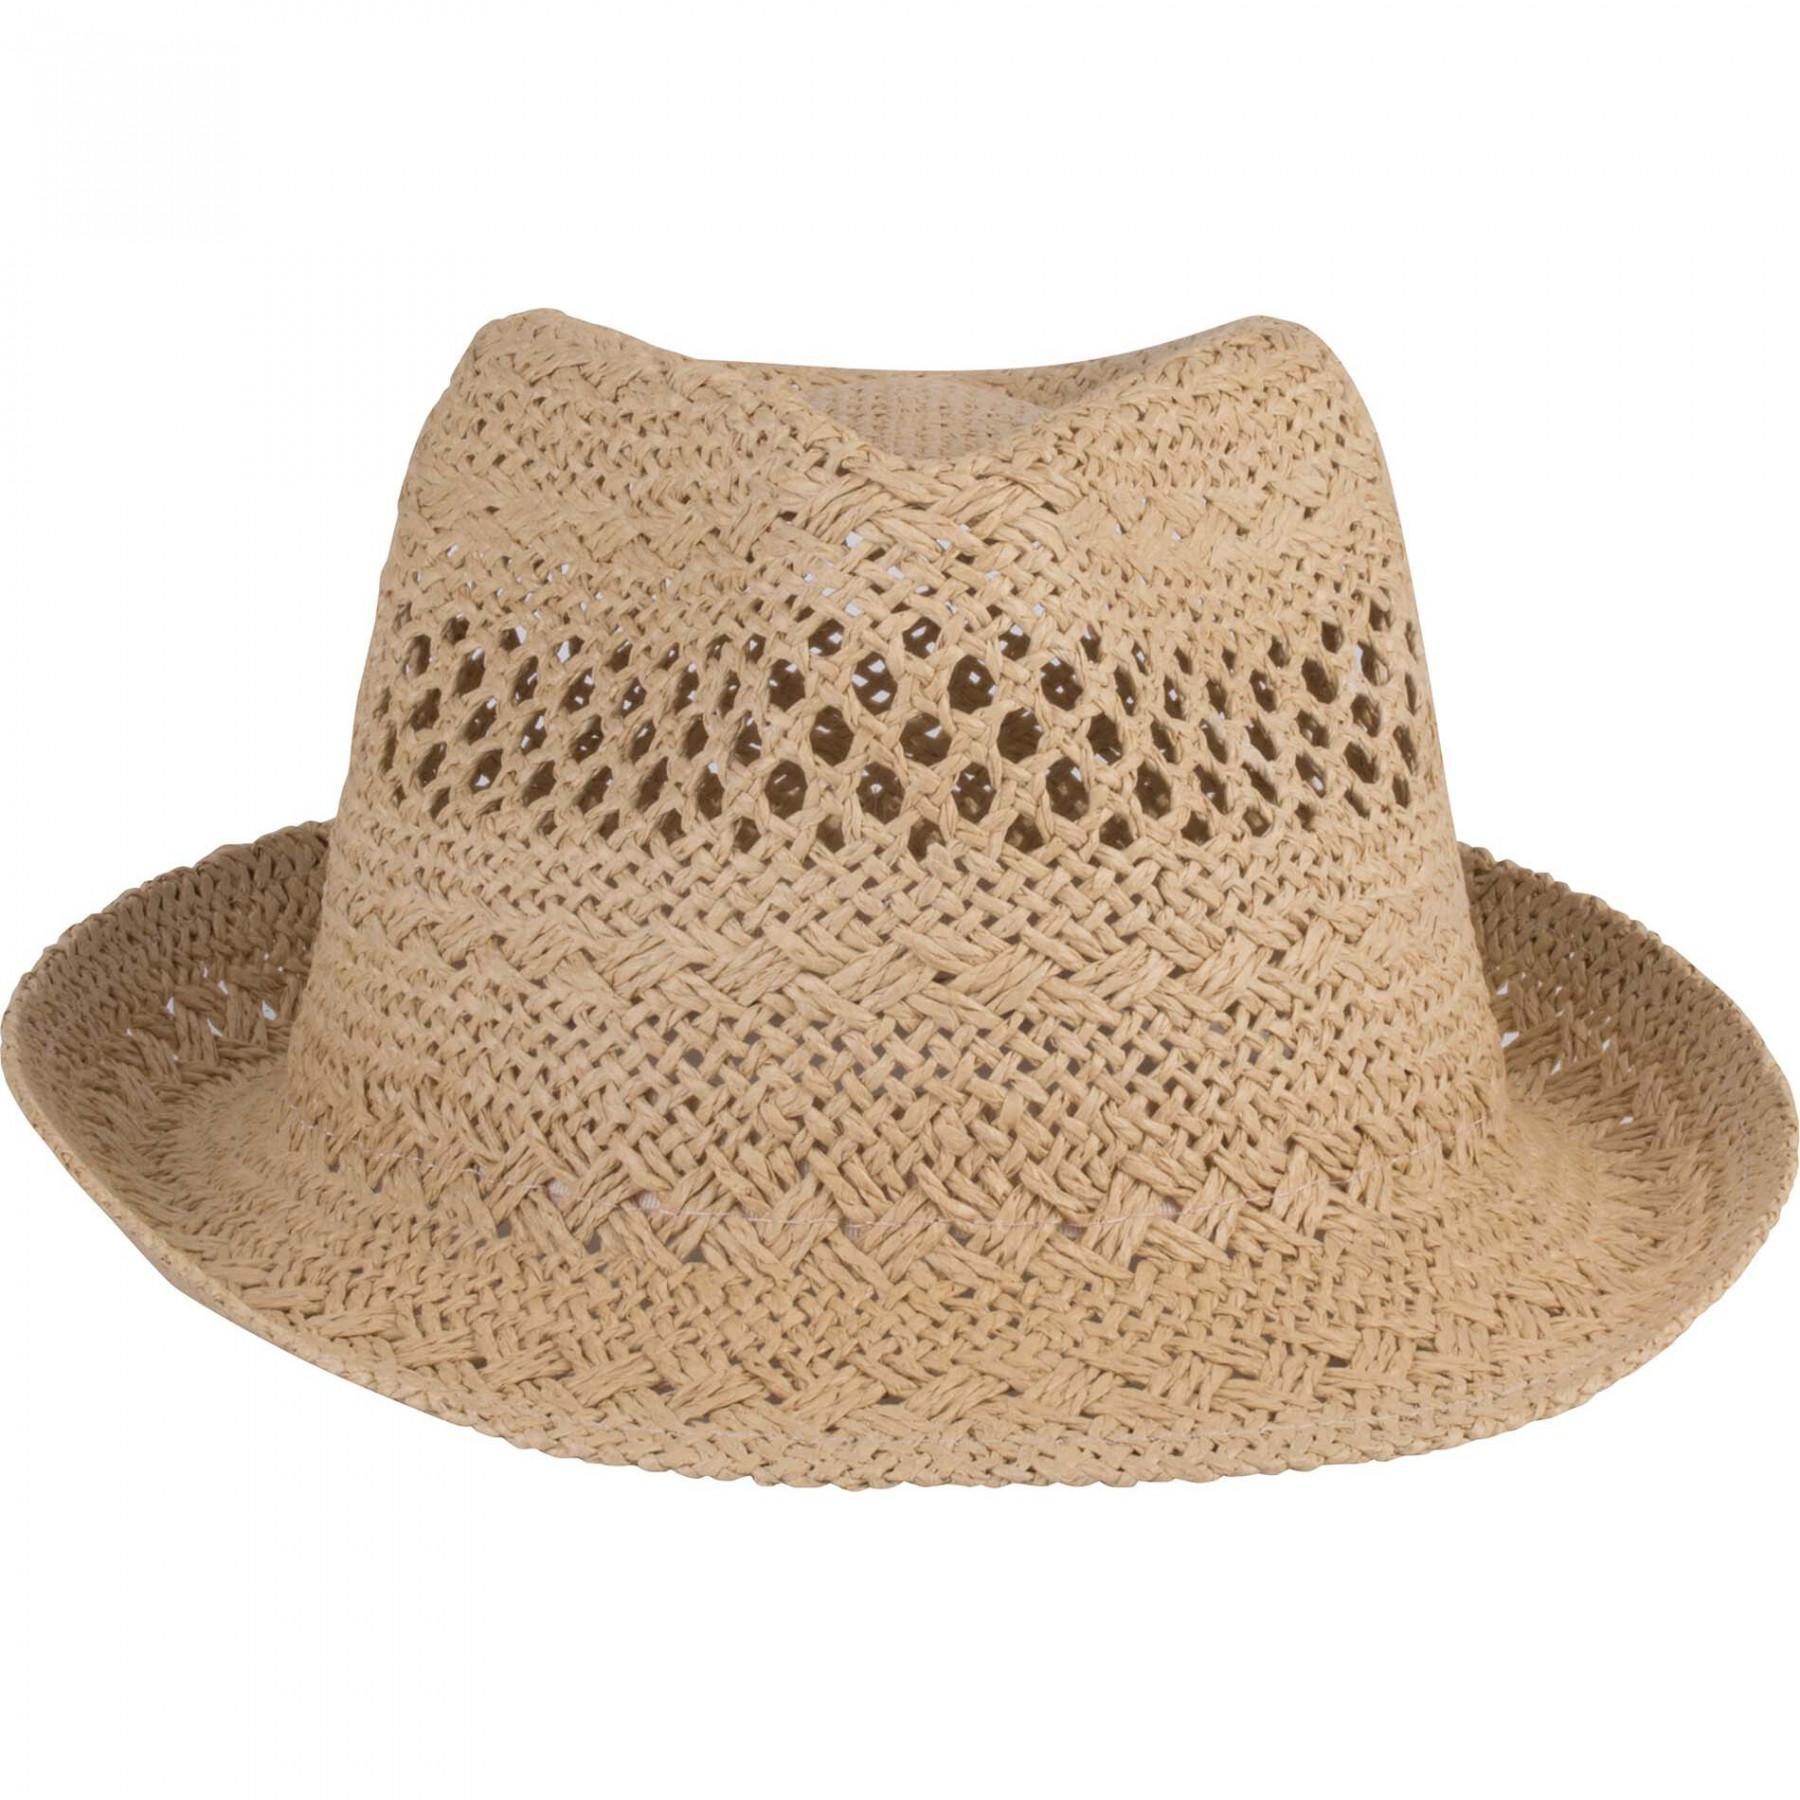 Straw hat K-up Panama